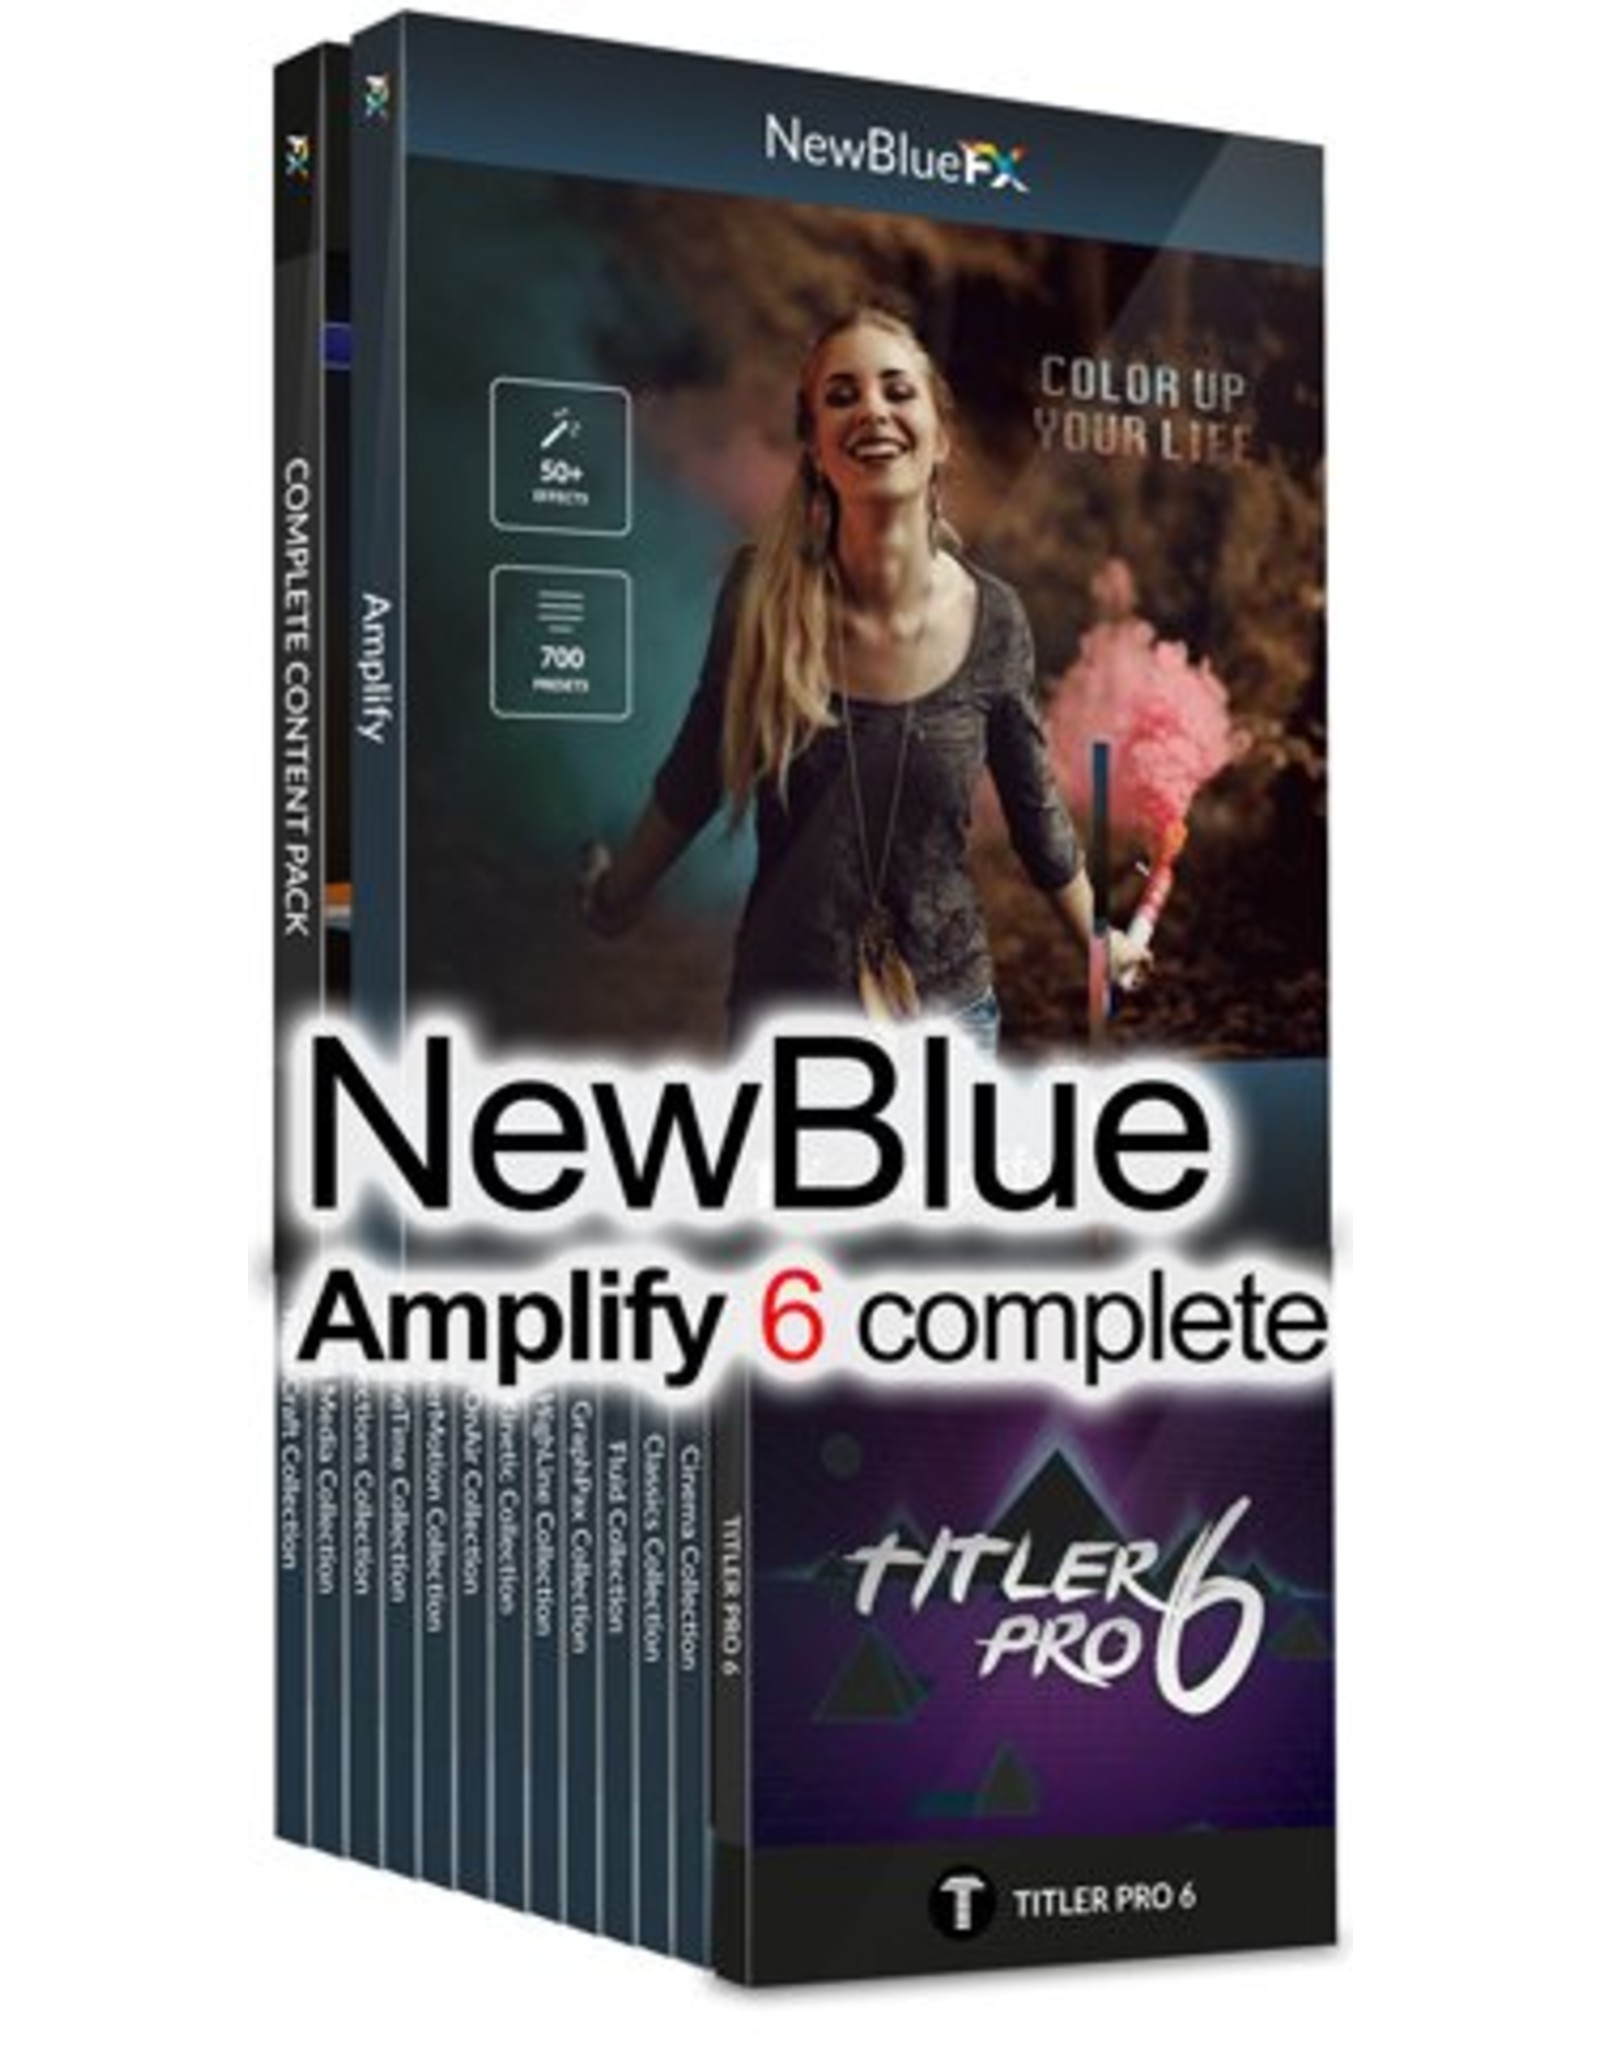 NewBlueFX Amplify 6 complete for EDIUS 9